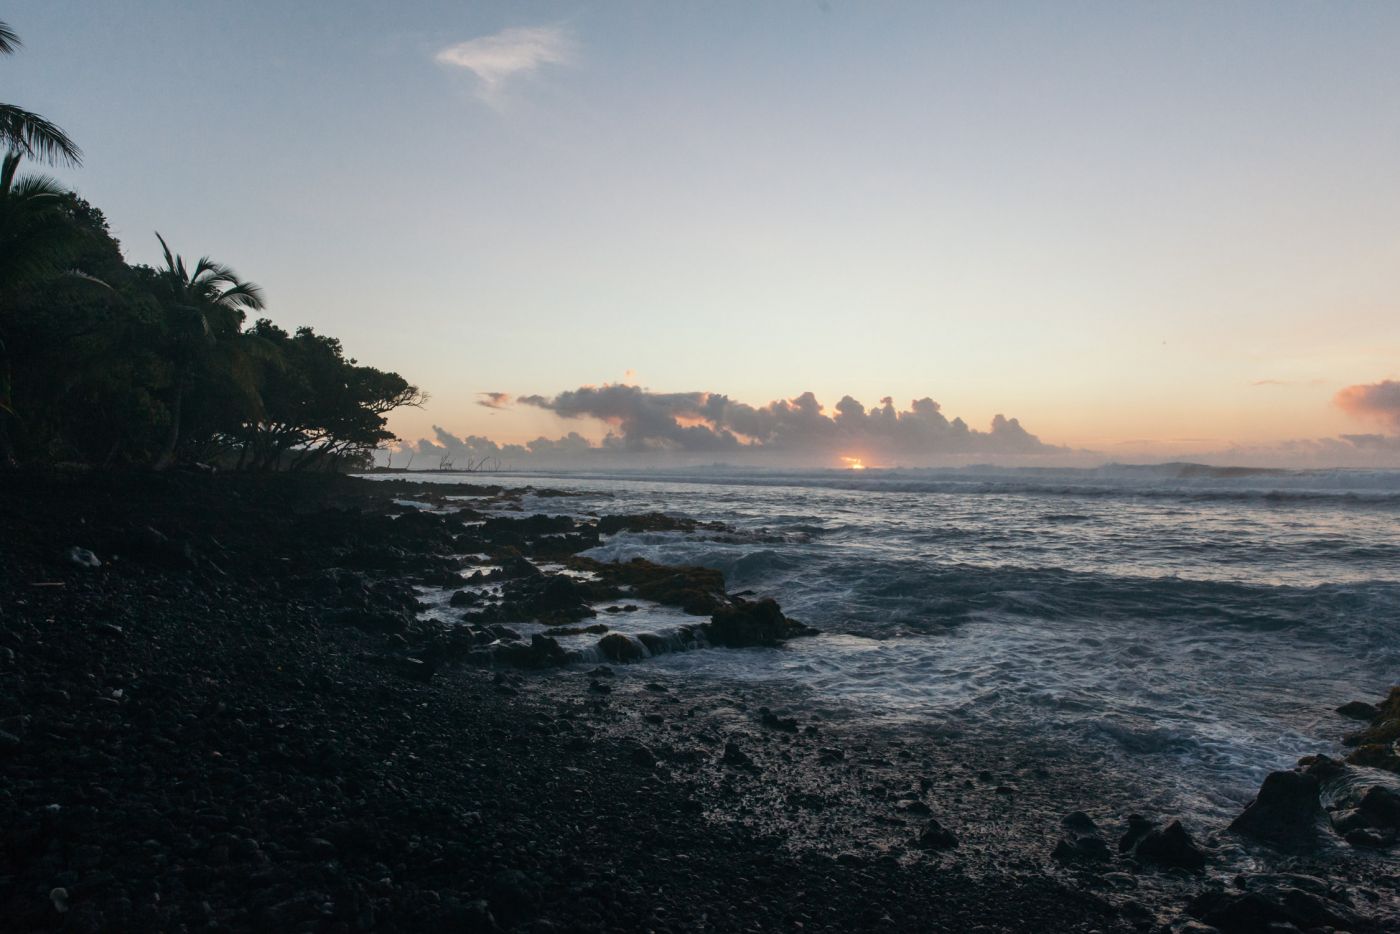 Before sunrise, at Isaac Hale Beack Park, Hawaii